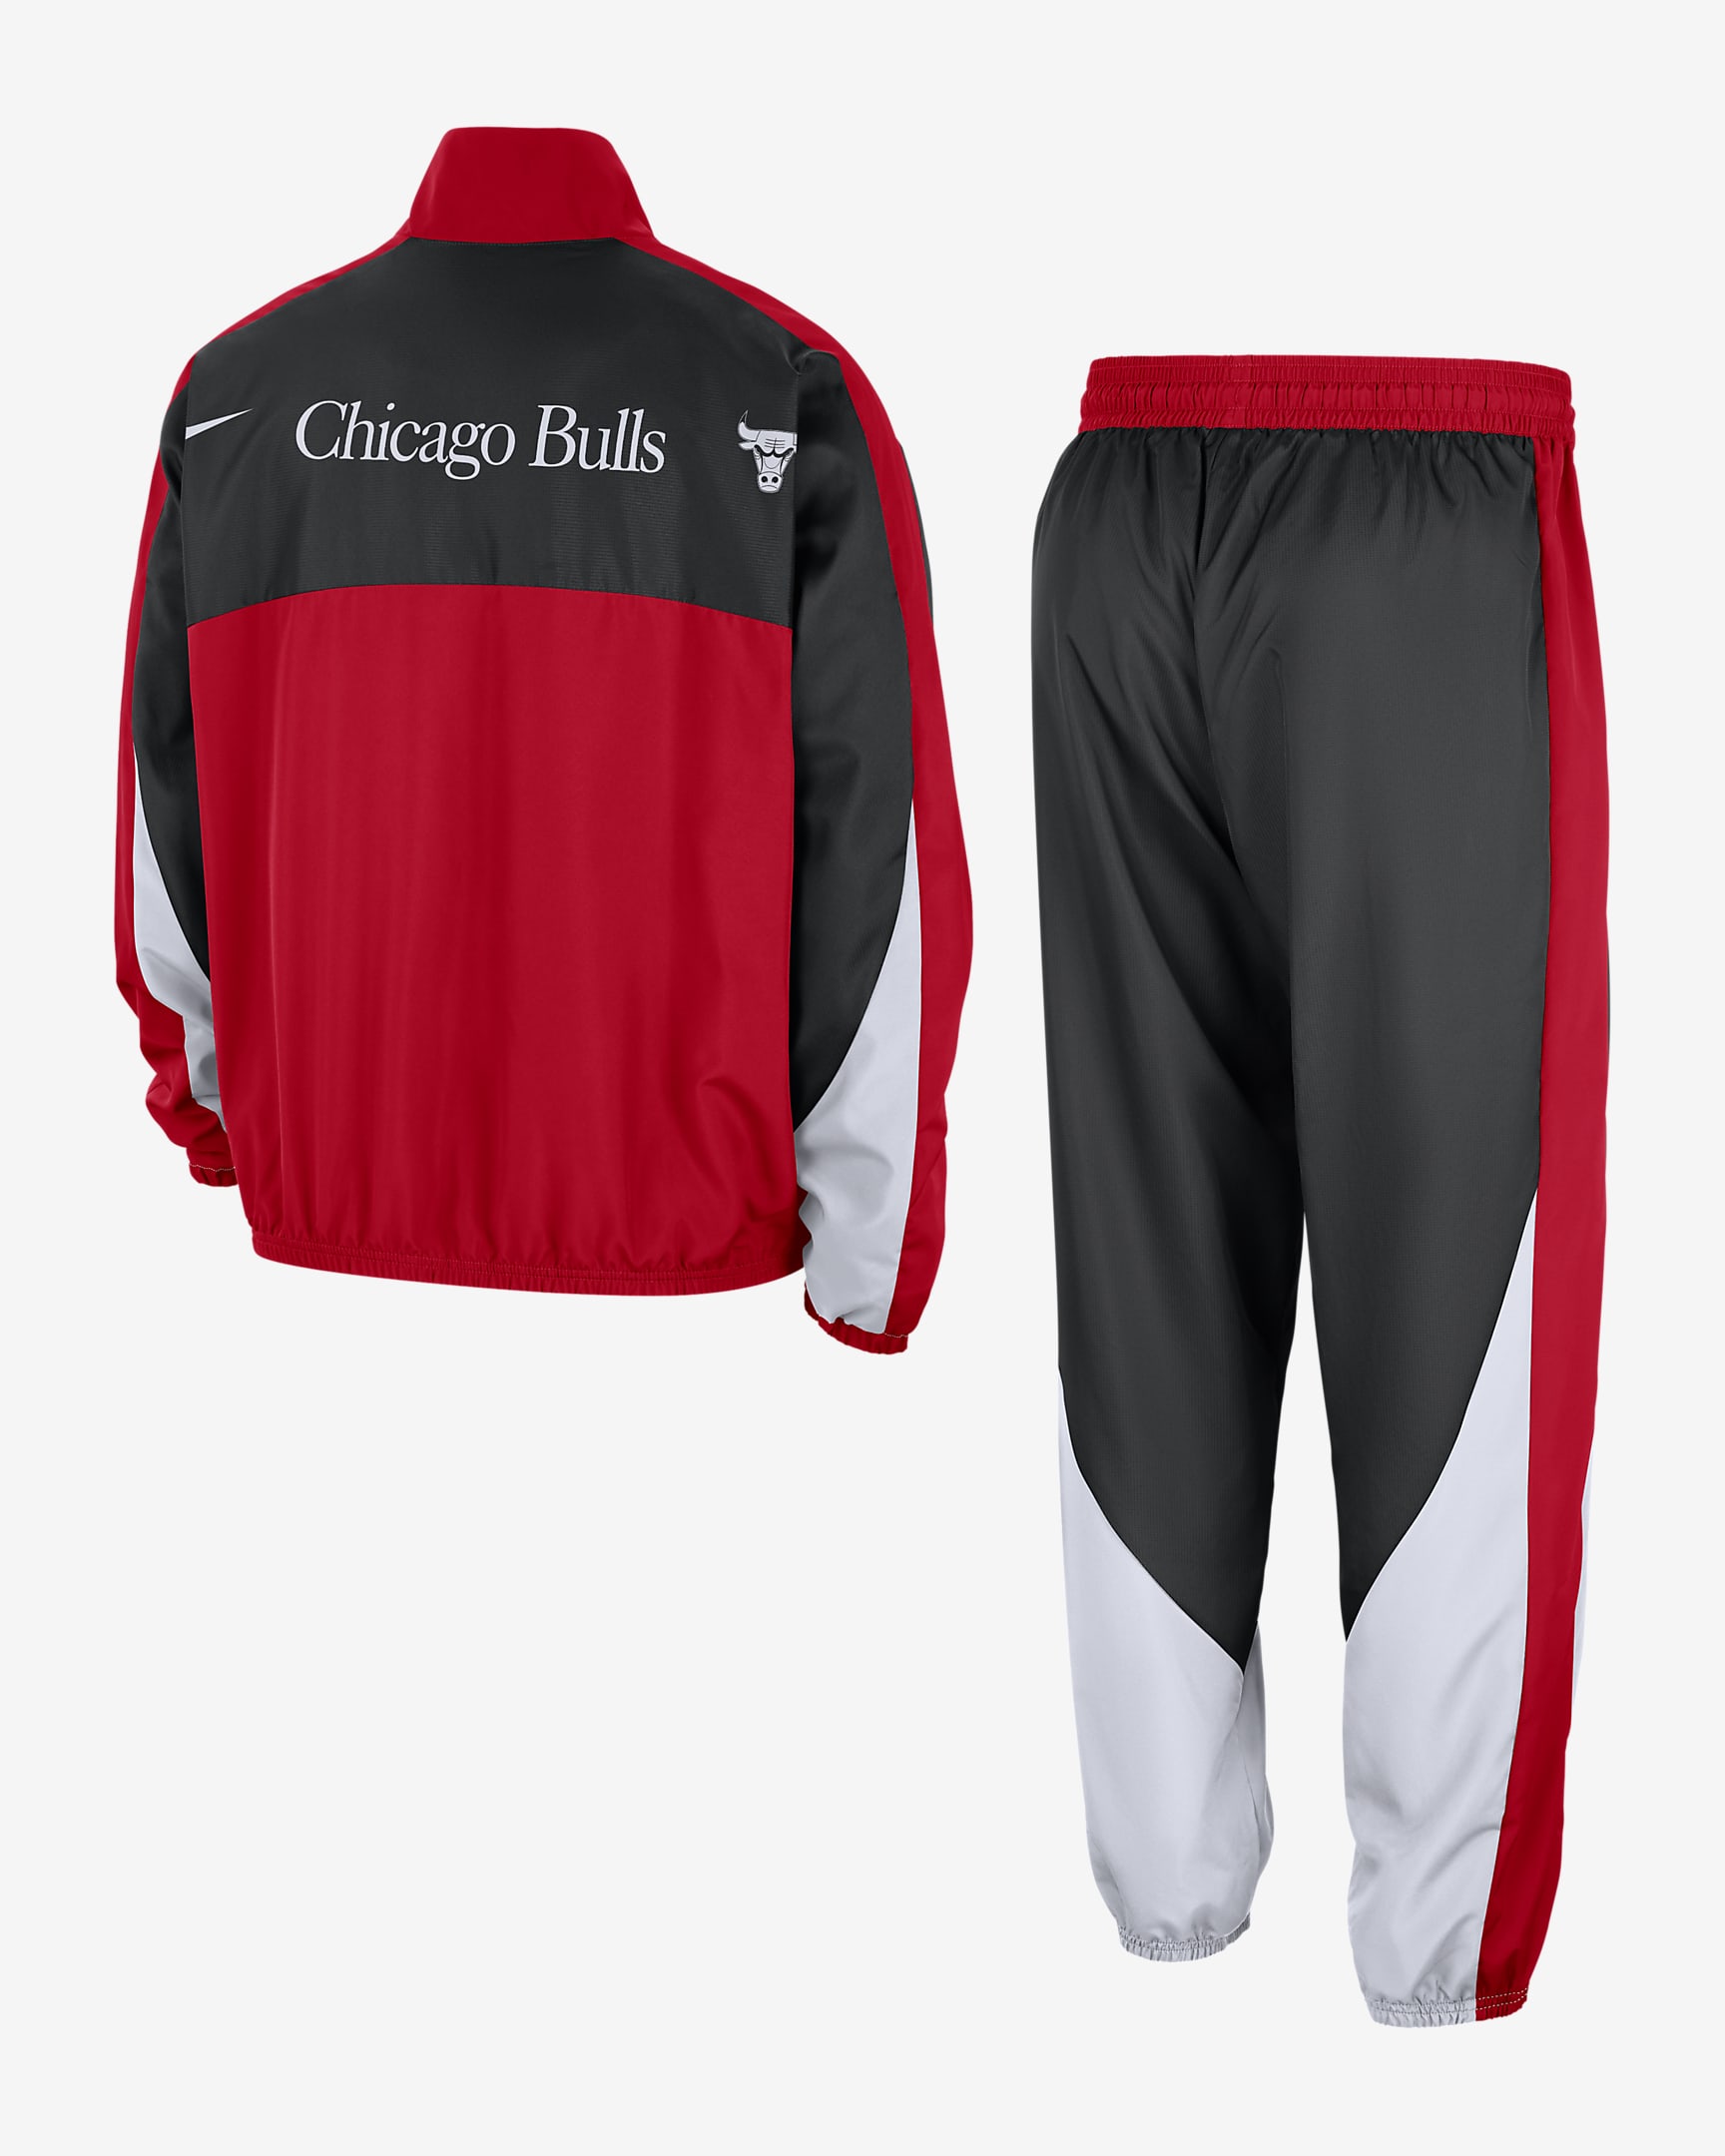 Chicago Bulls Starting 5 Courtside Men's Nike NBA Graphic Tracksuit - University Red/Black/White